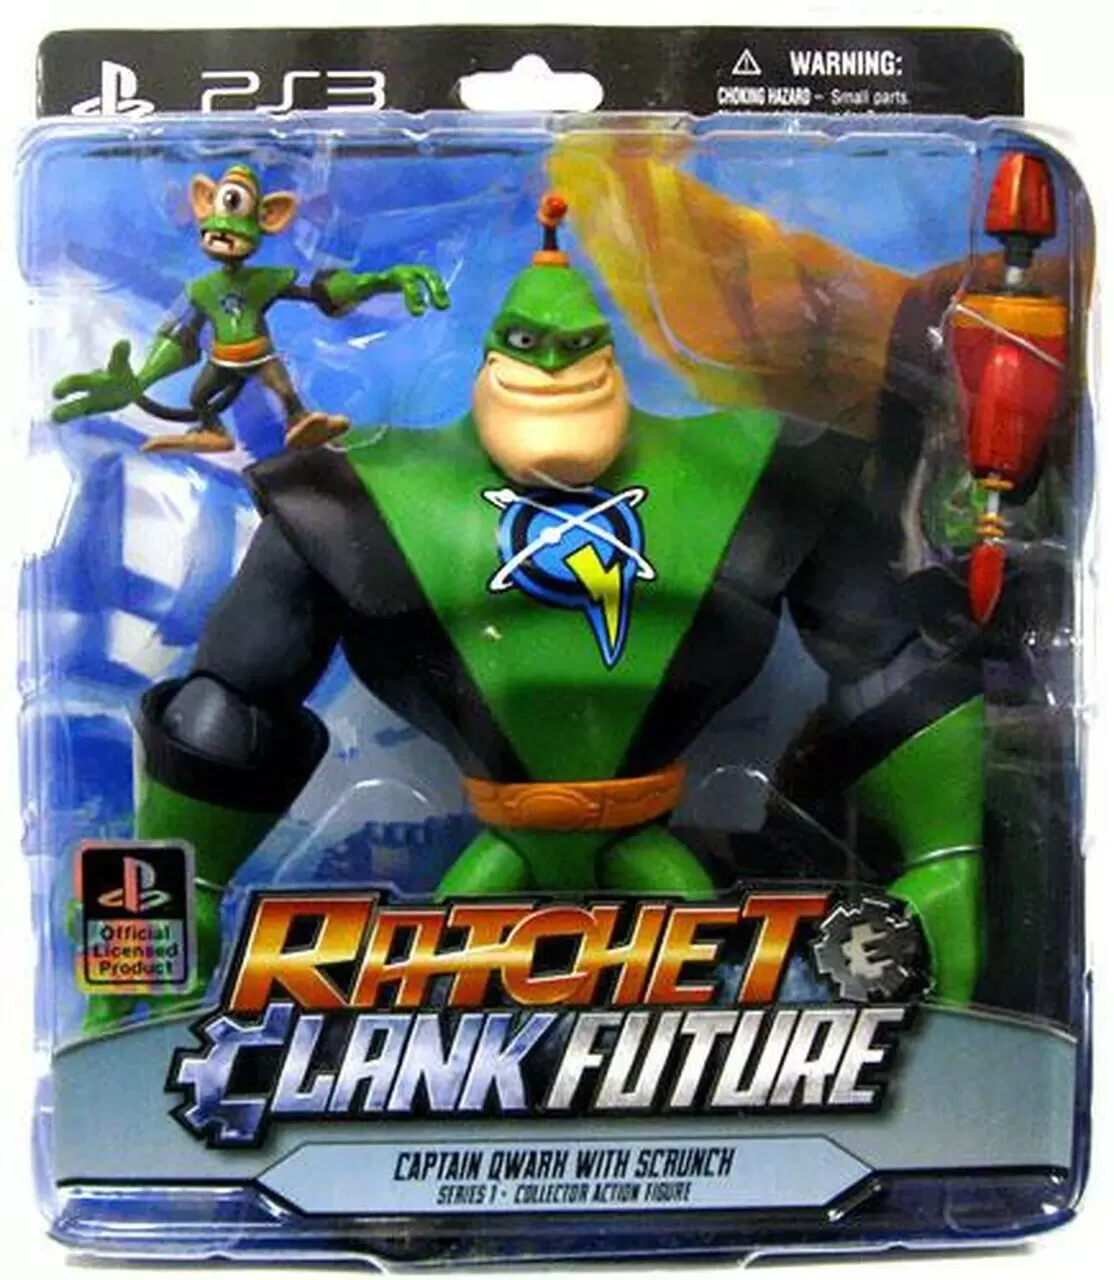 Ratchet and Clank Future - Captain Quark & Scrunch